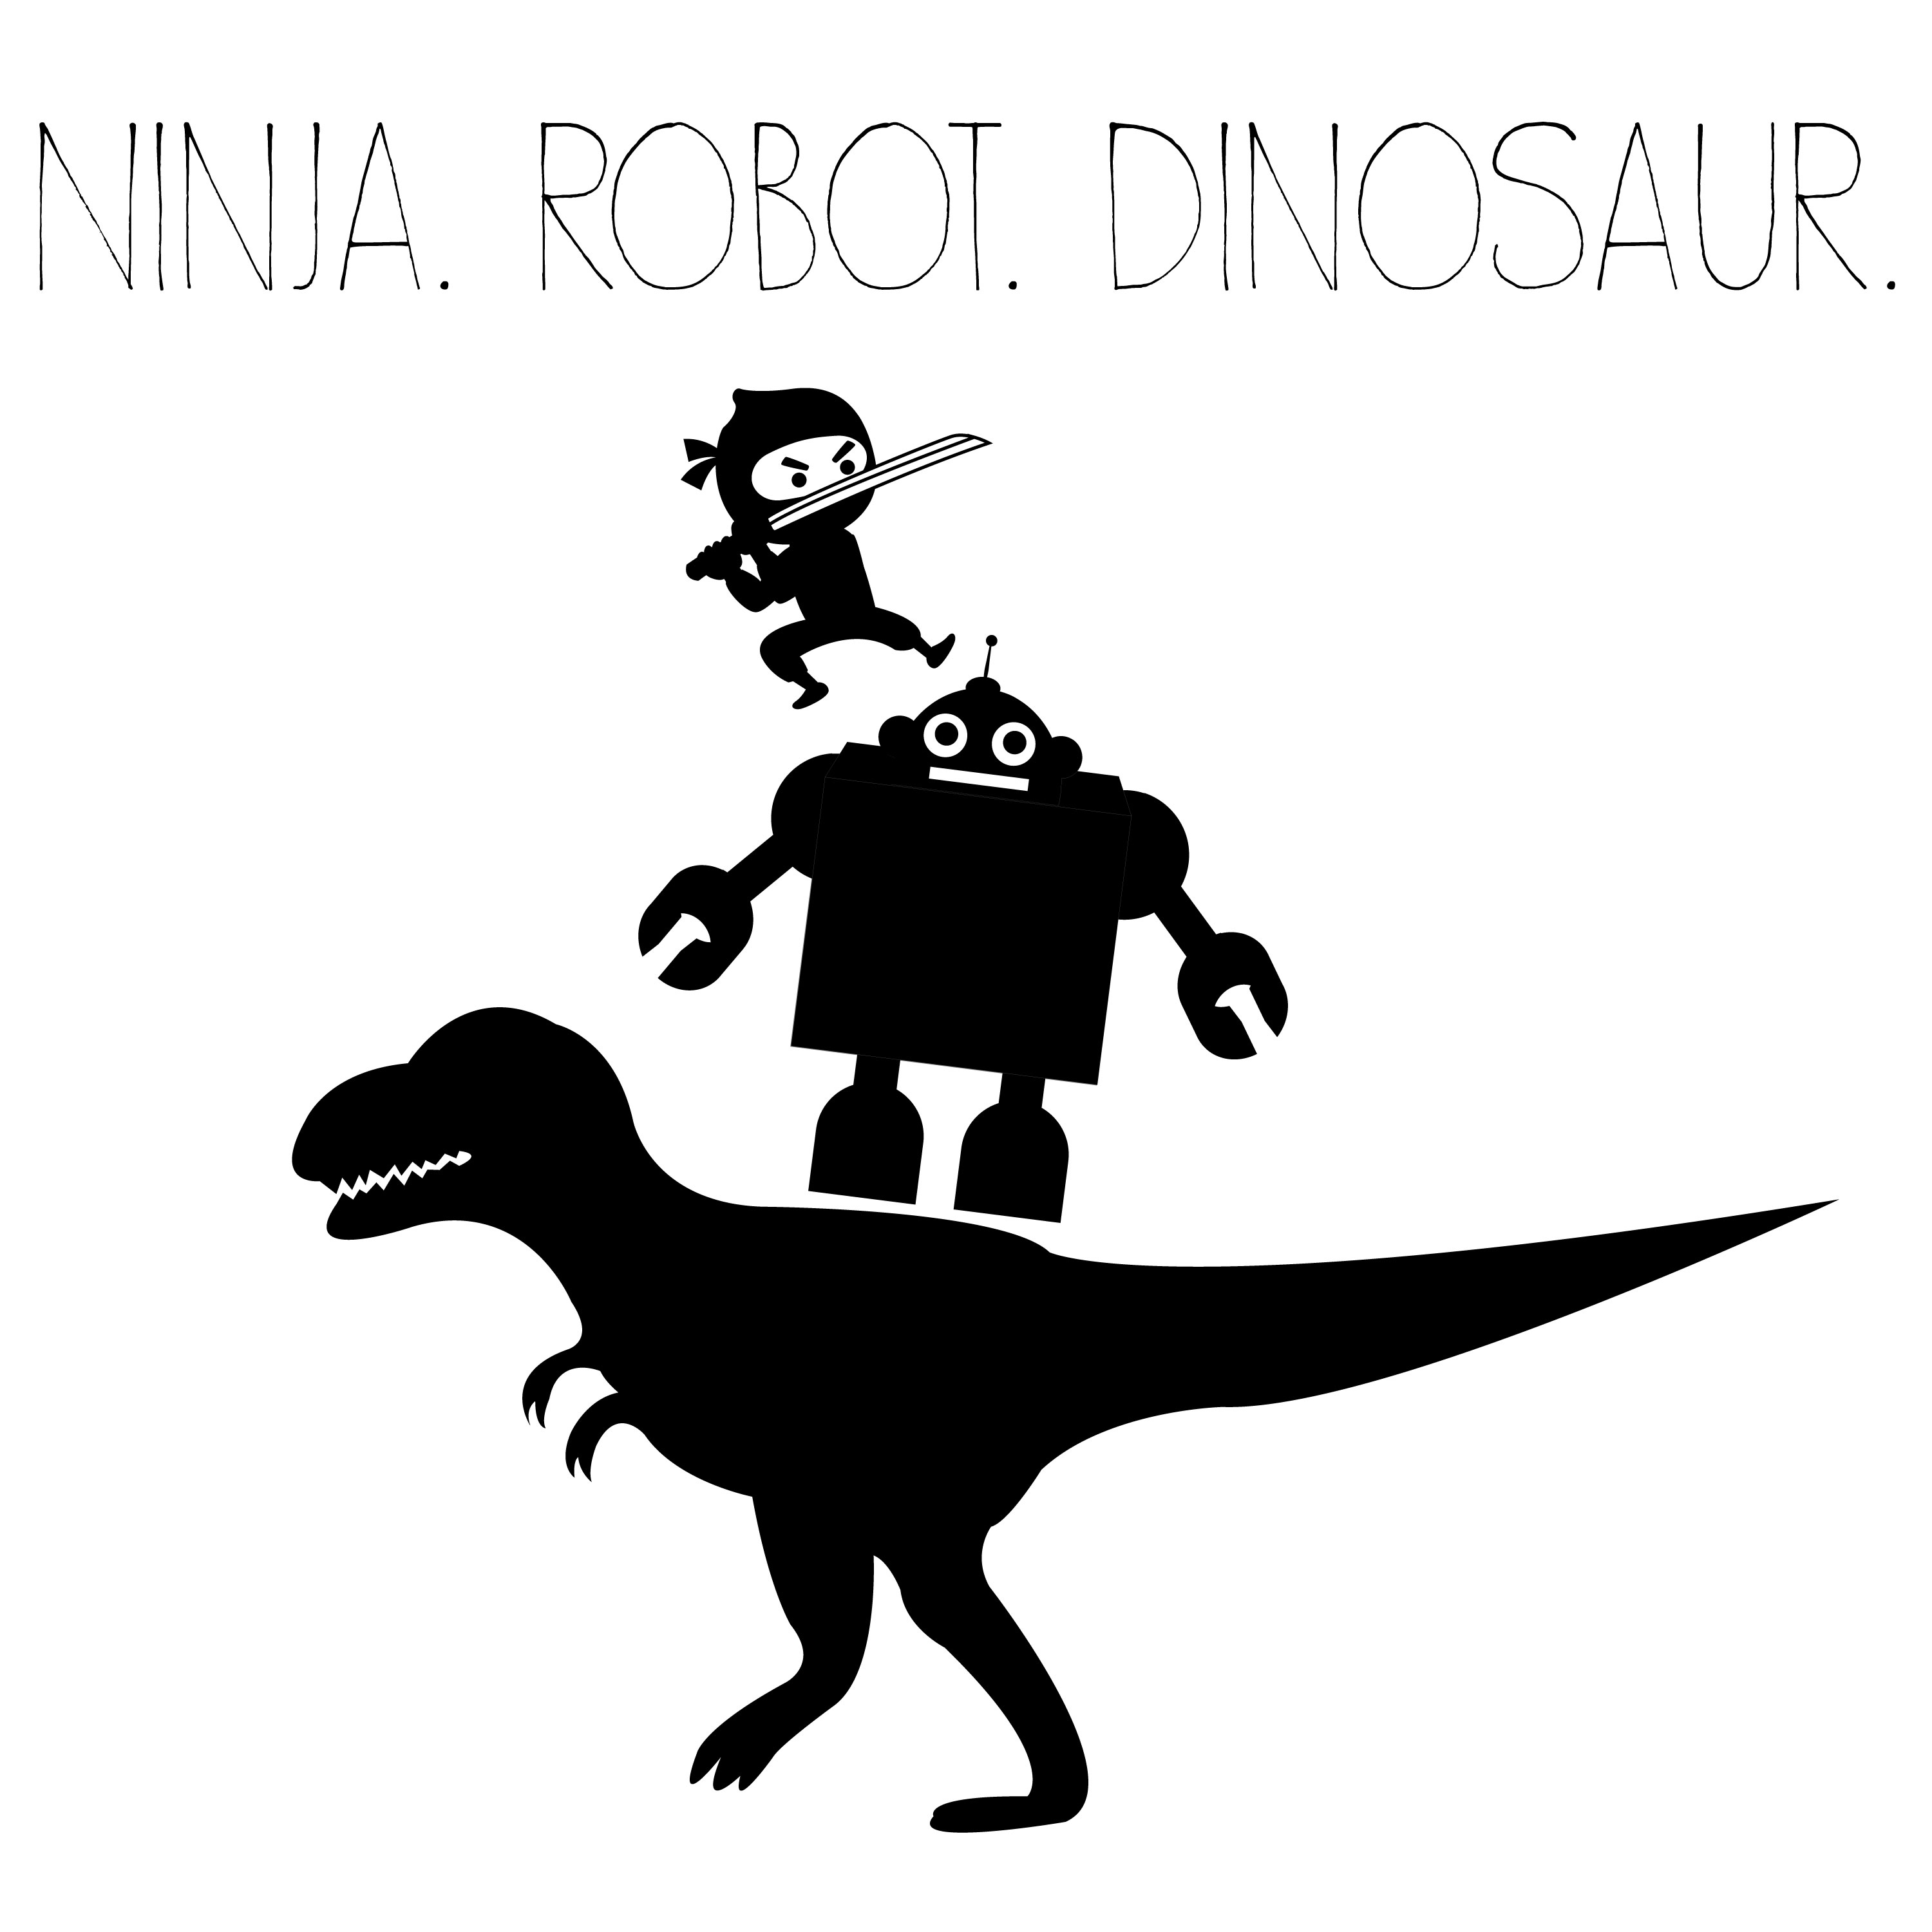 Ninja Robot Dinosaur